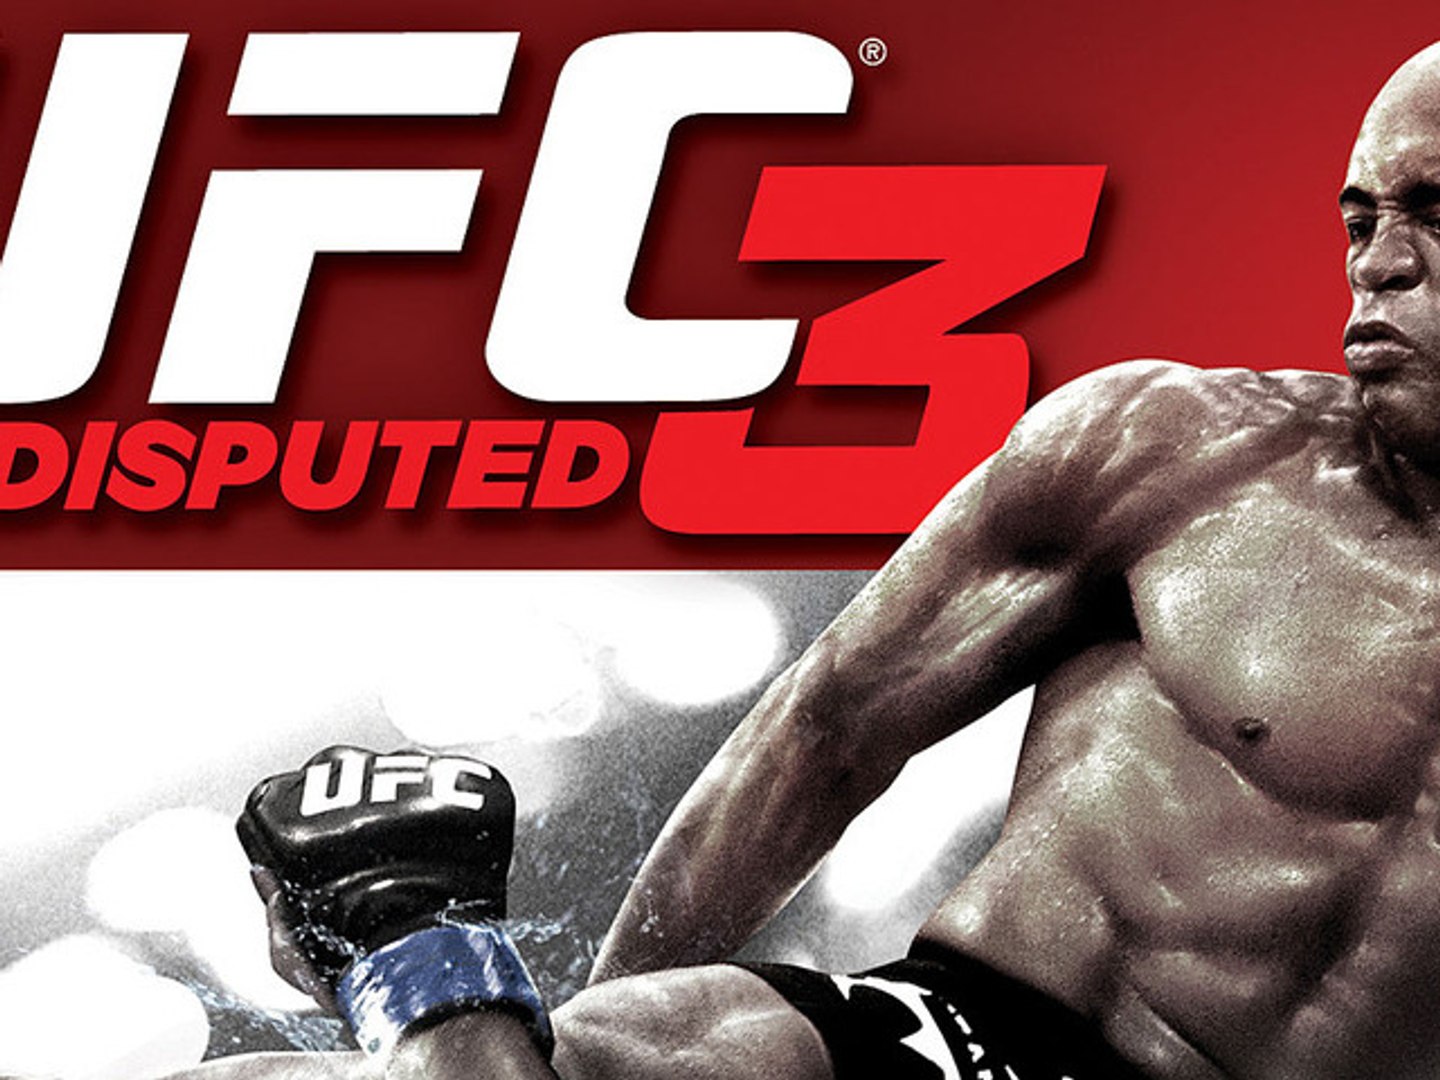 UFC UNDISPUTED 3 Demo Trailer - video Dailymotion